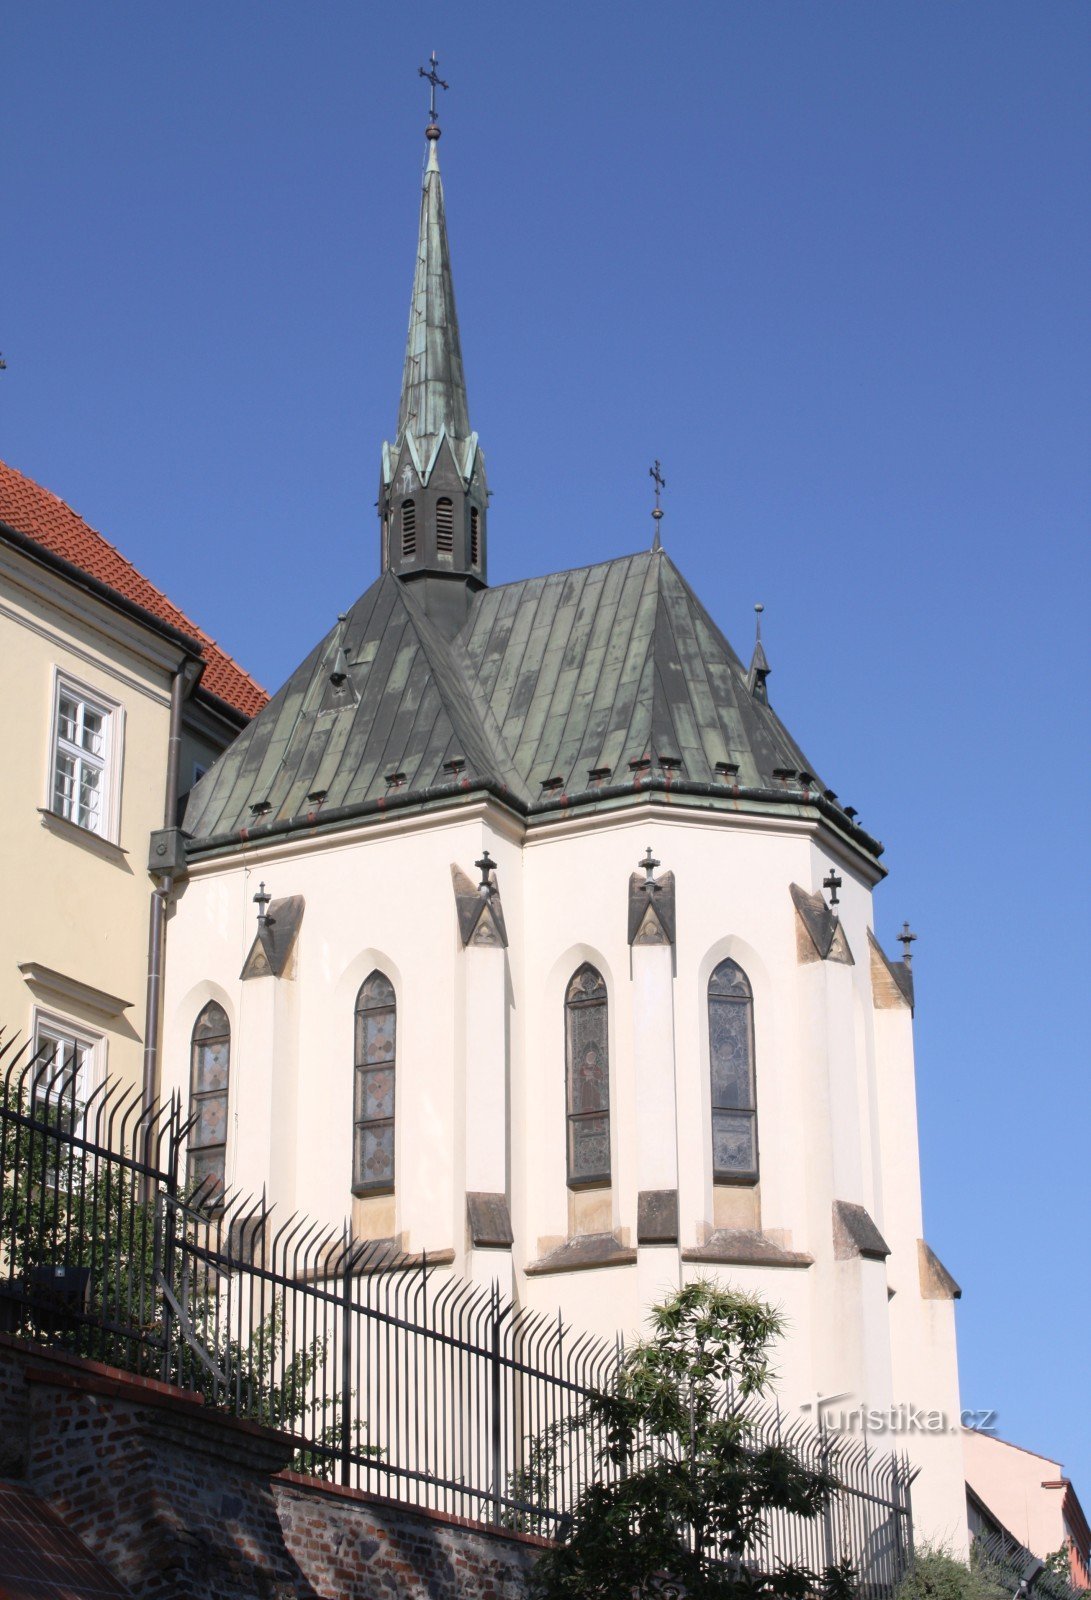 Brno-Petrov - chapel of St. Cross and Virgin Mary